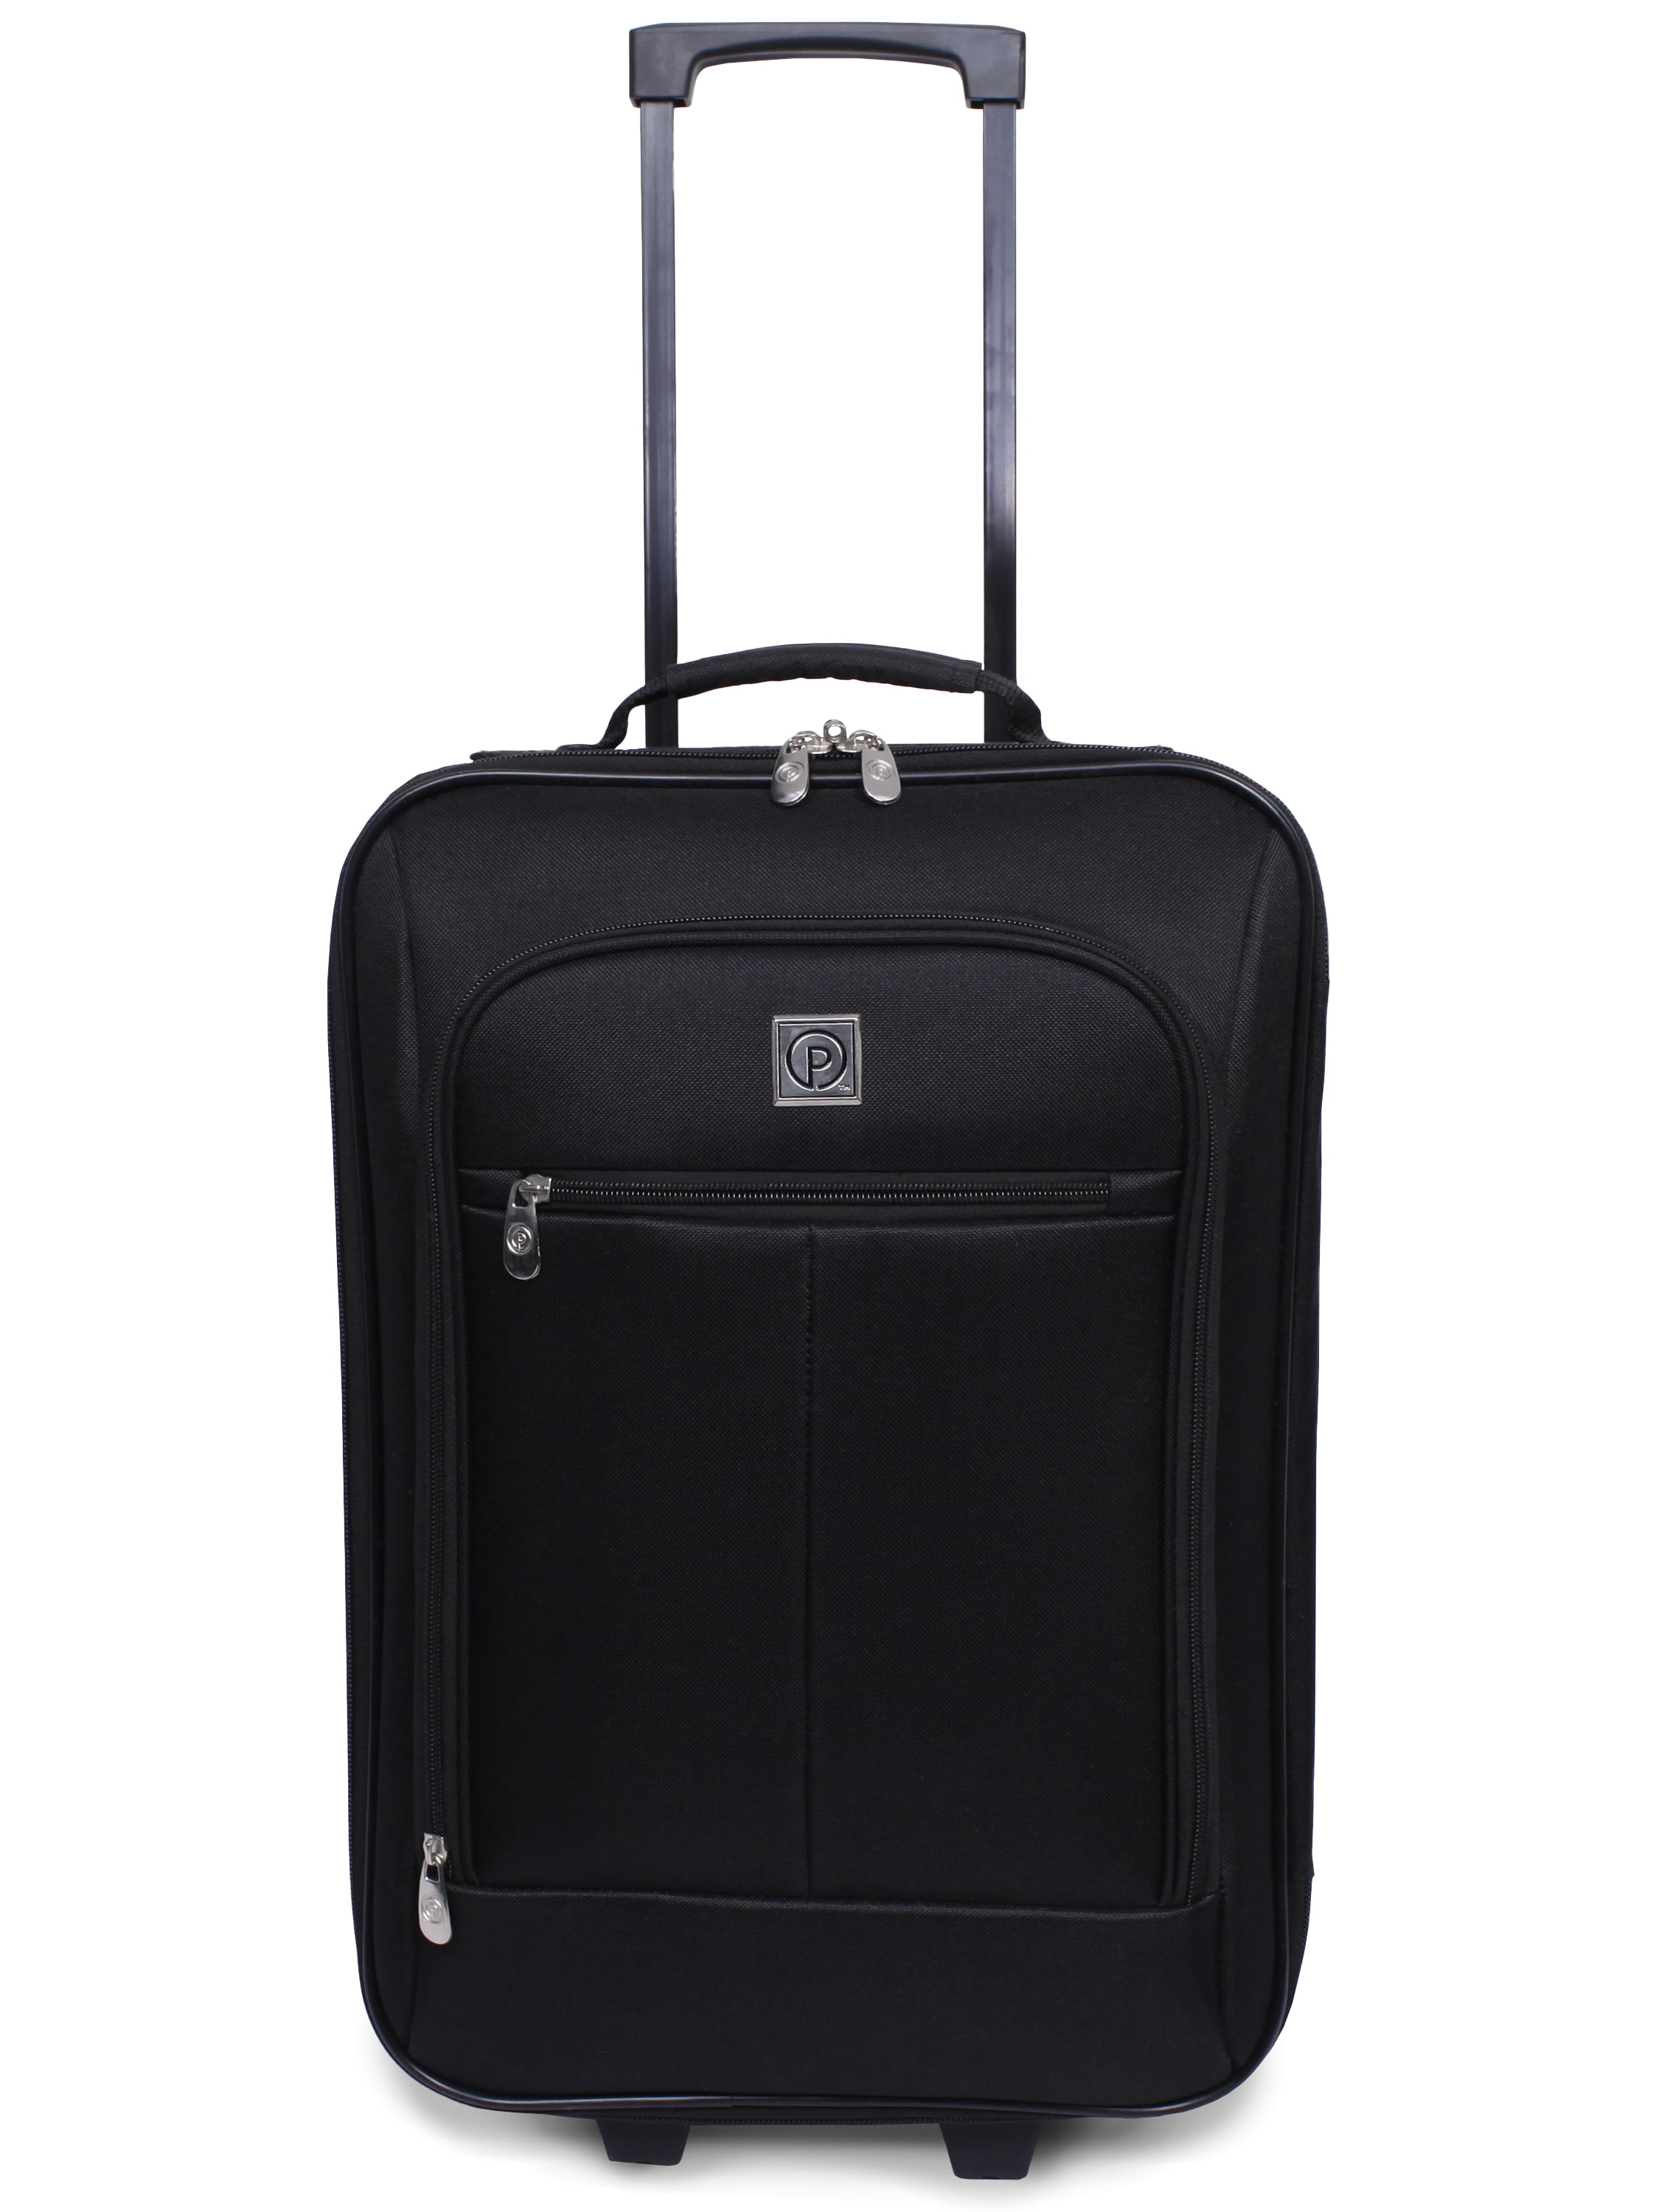 Protege Pilot Case Carry-On Suitcase, 18 (Walmart Exclusive) - www.bagsaleusa.com